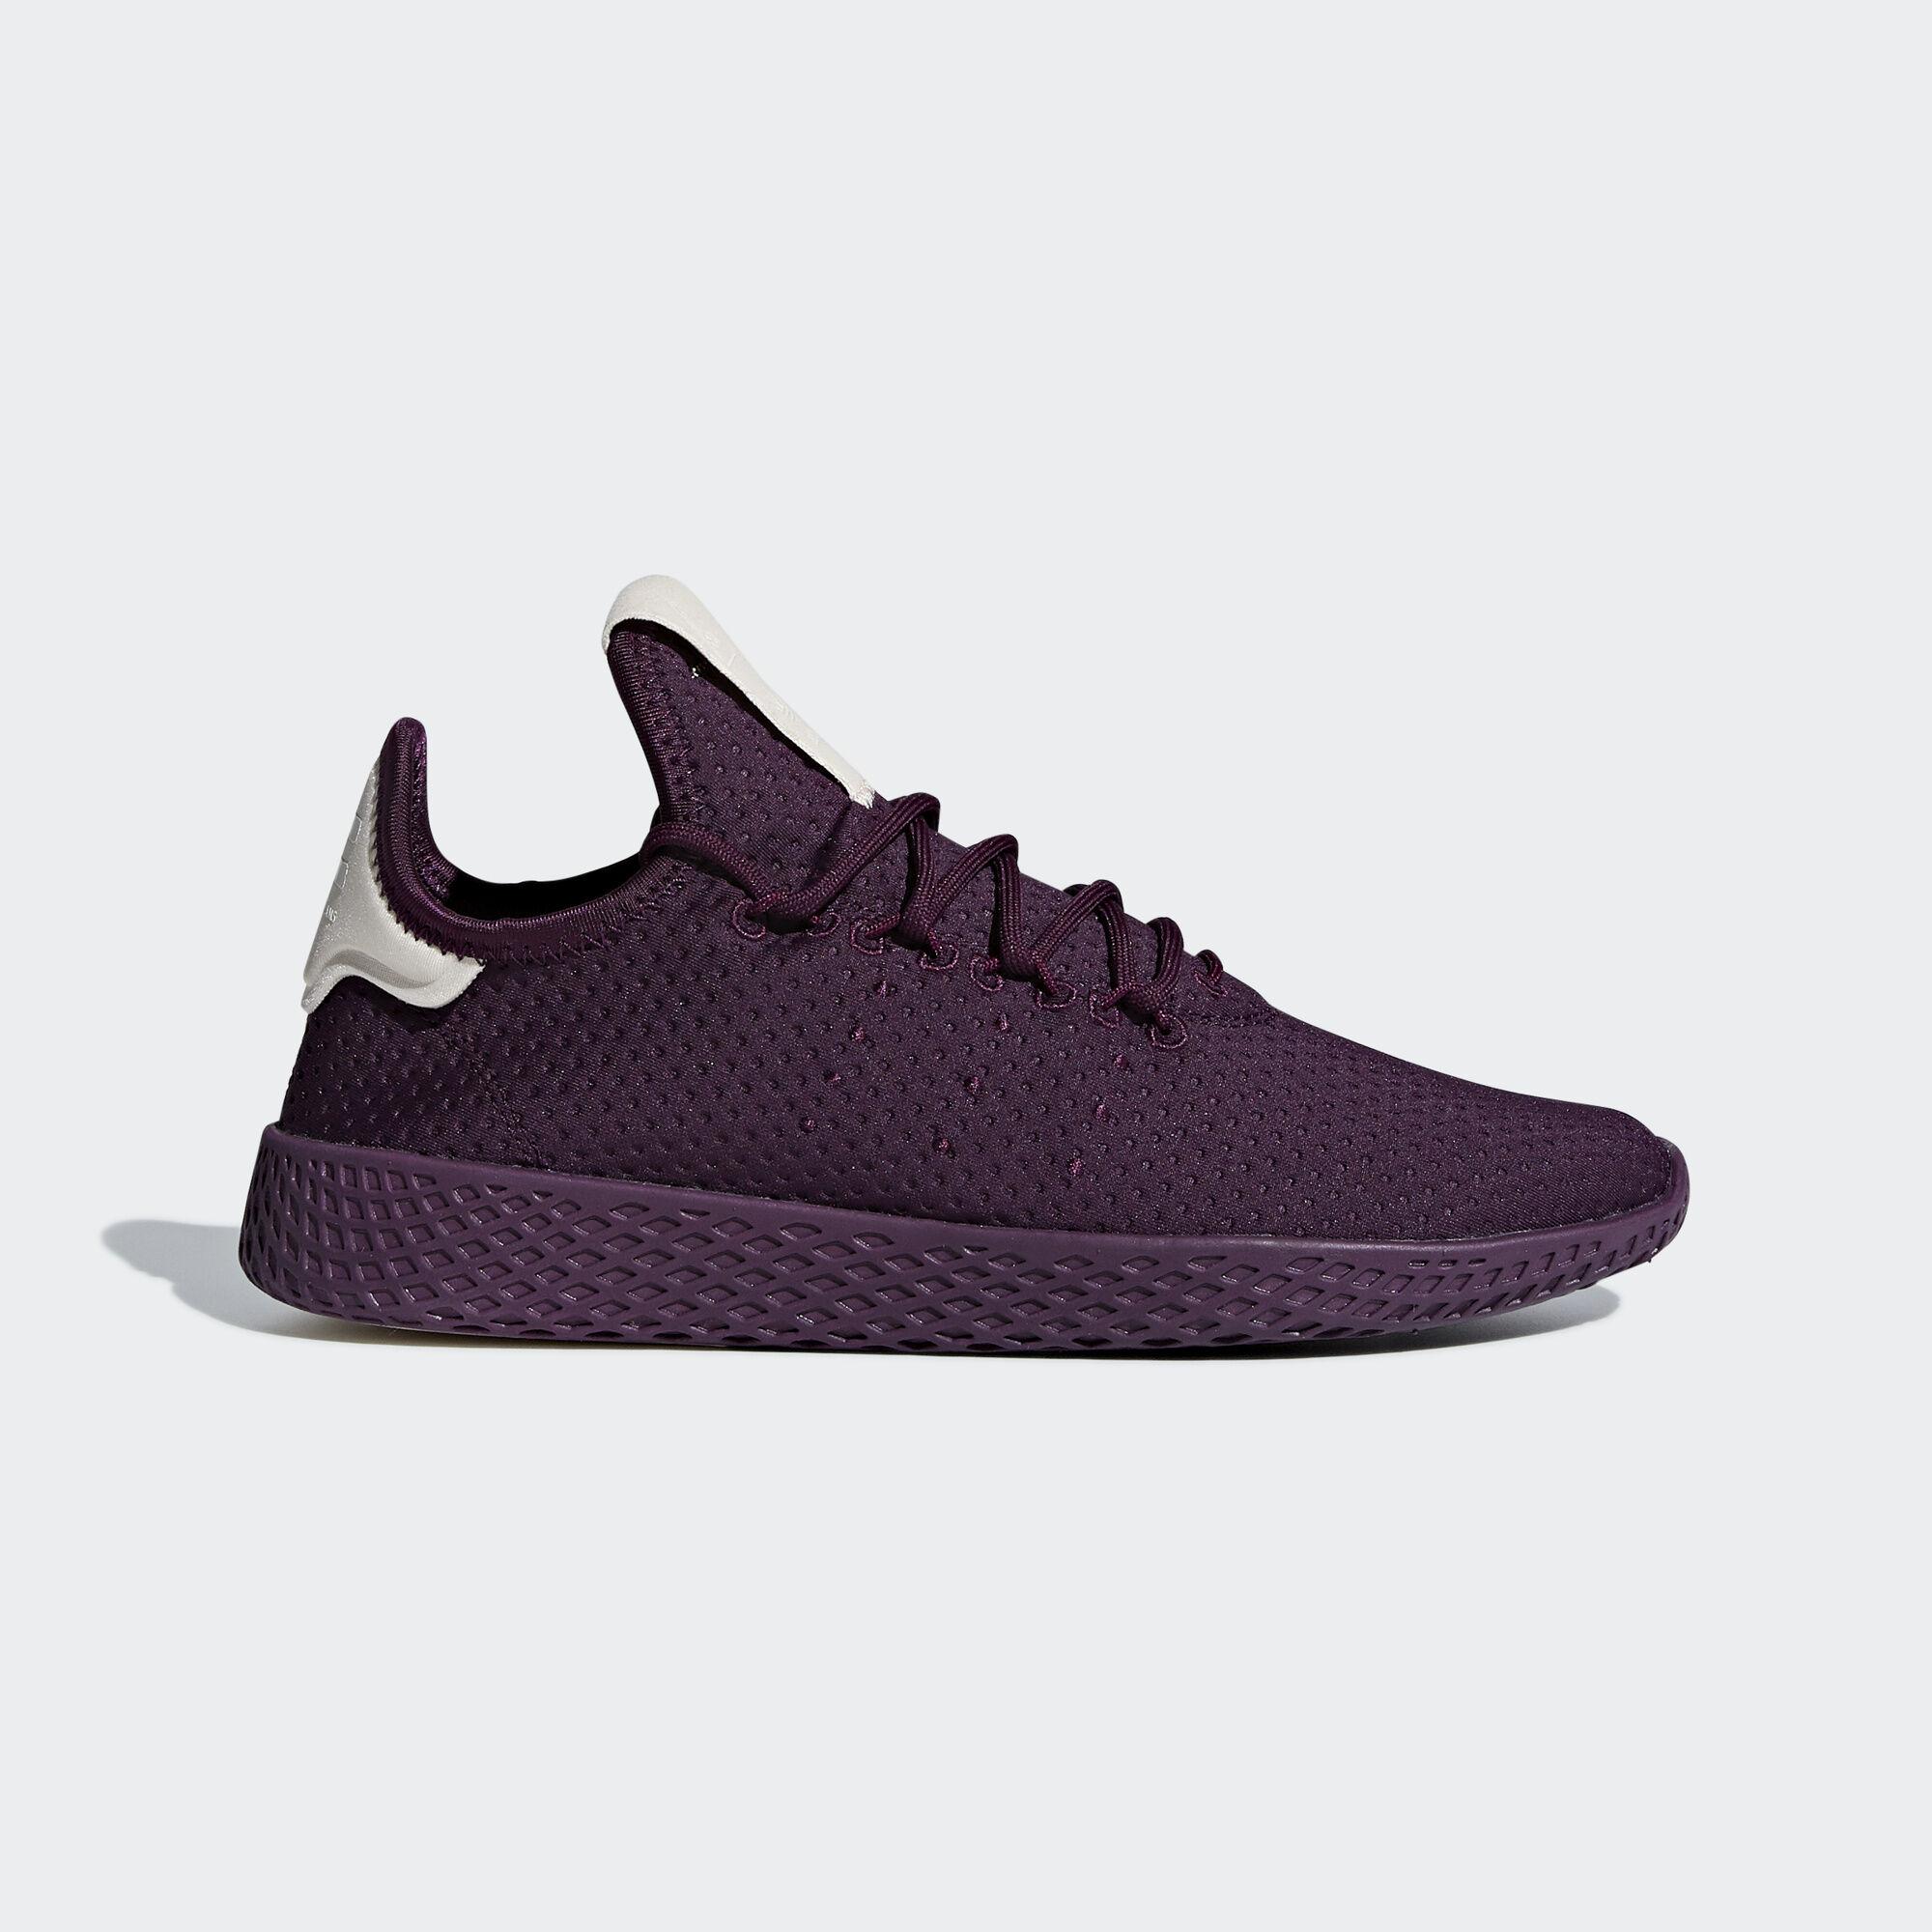 adidas Originals Pharrell Williams Tennis Hu Shoes in Purple - Lyst